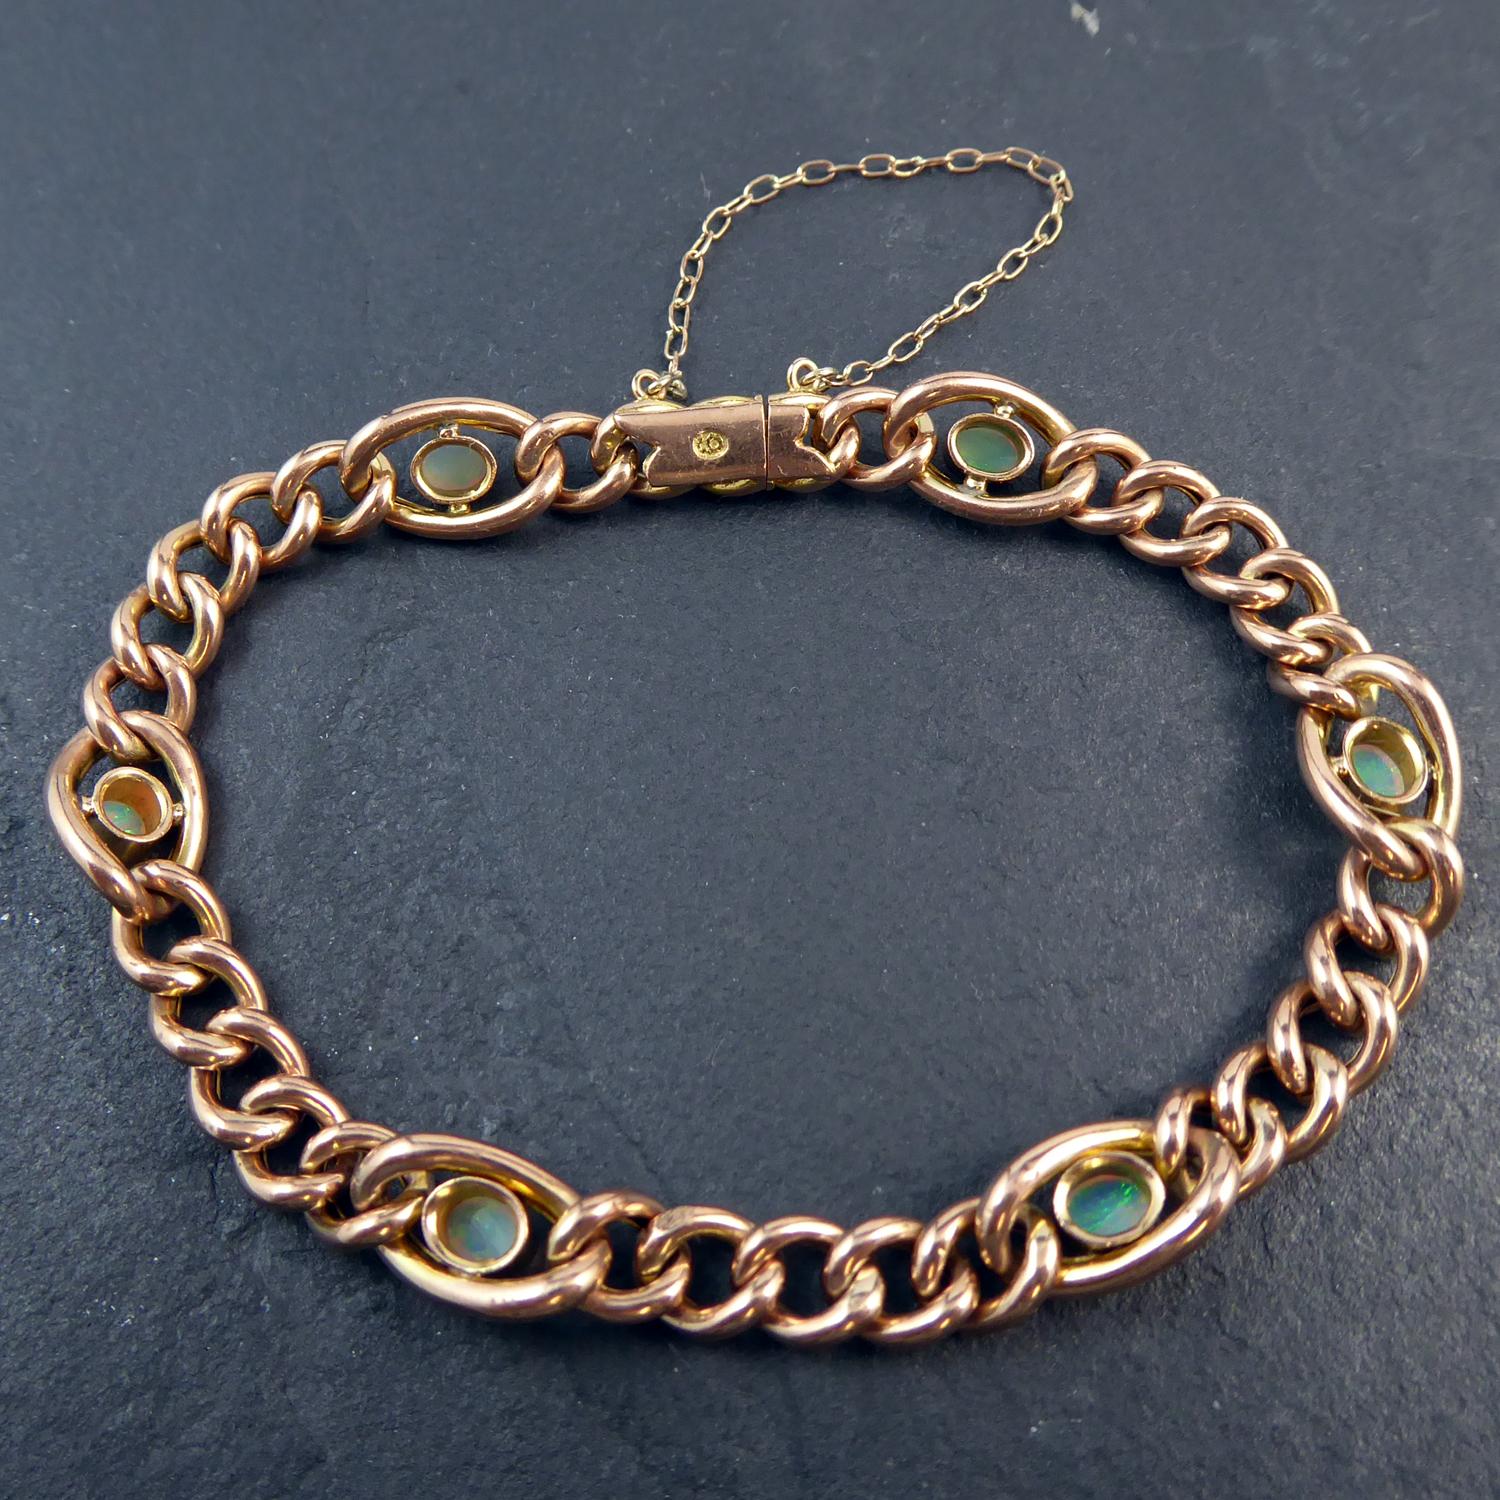 Oval Cut Antique Edwardian Gold Curb Link Bracelet with Cabochon Opals